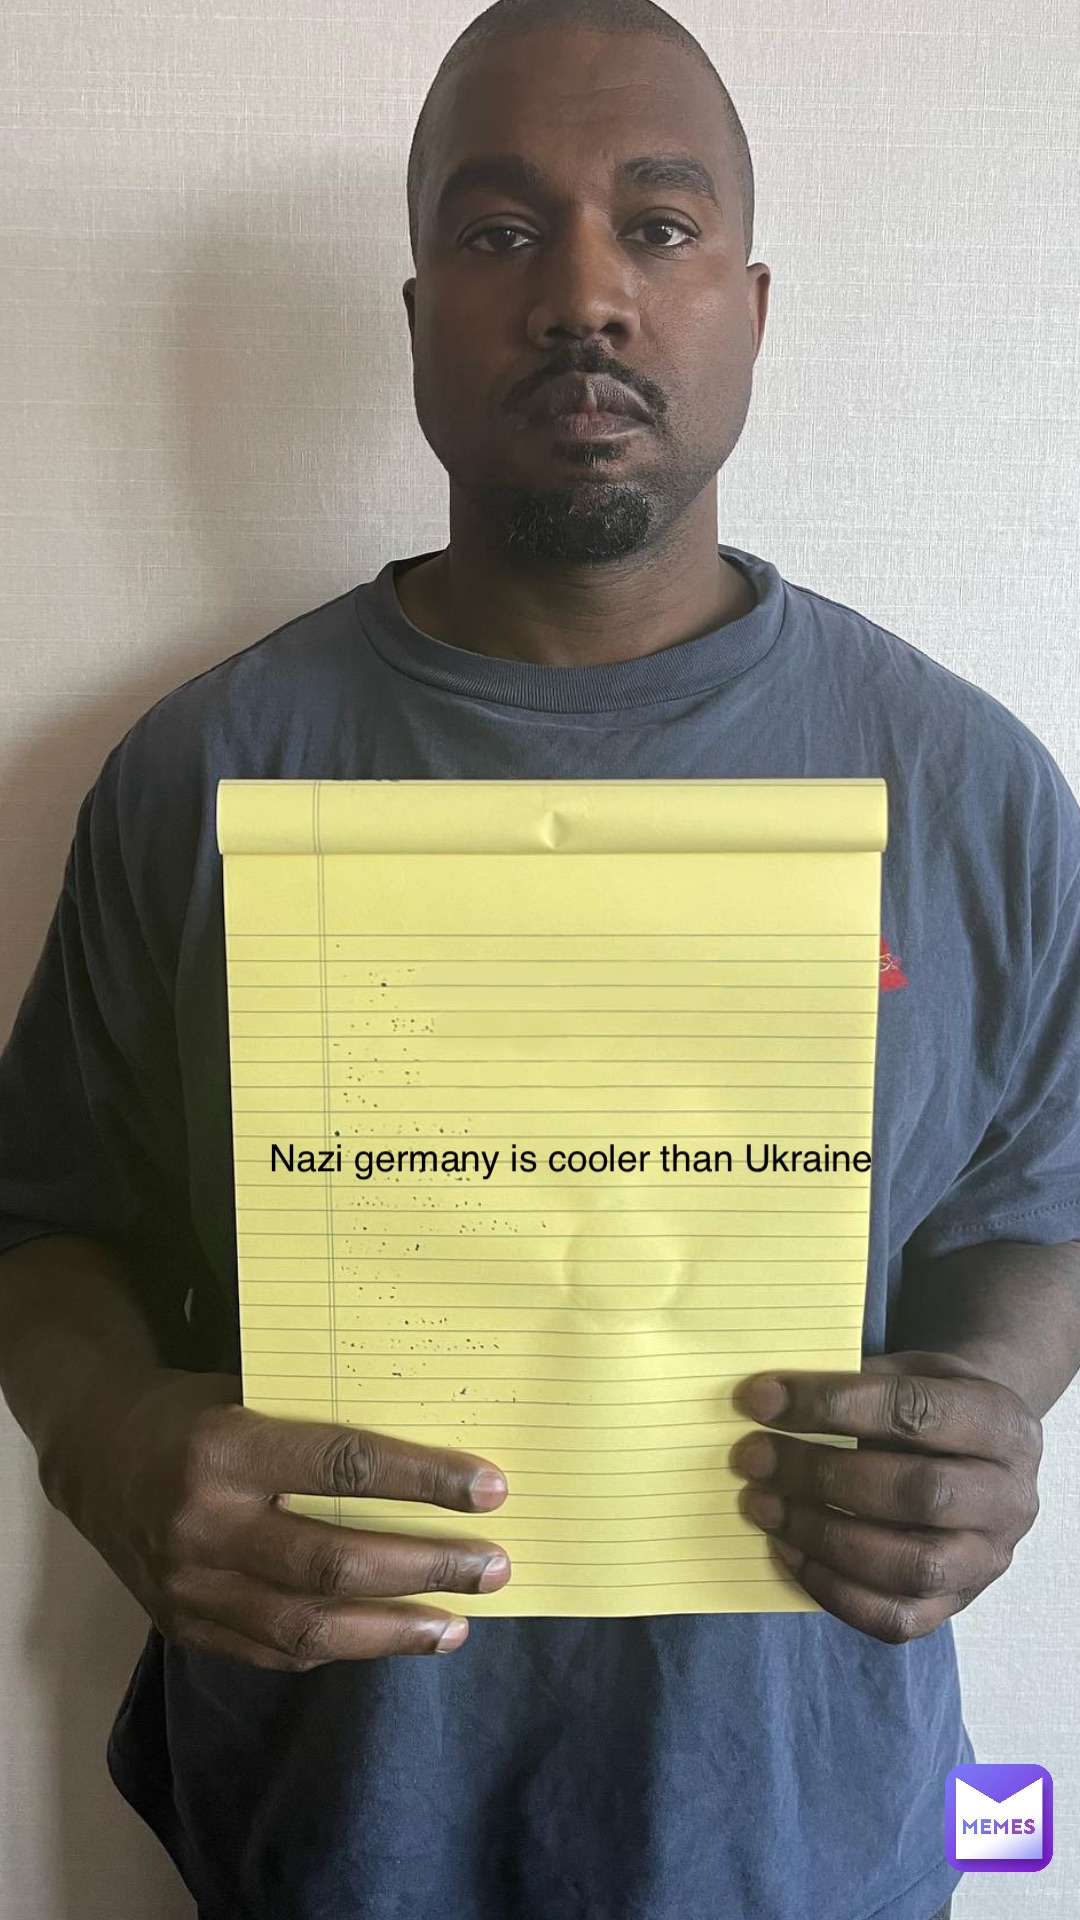 Nazi germany is cooler than Ukraine